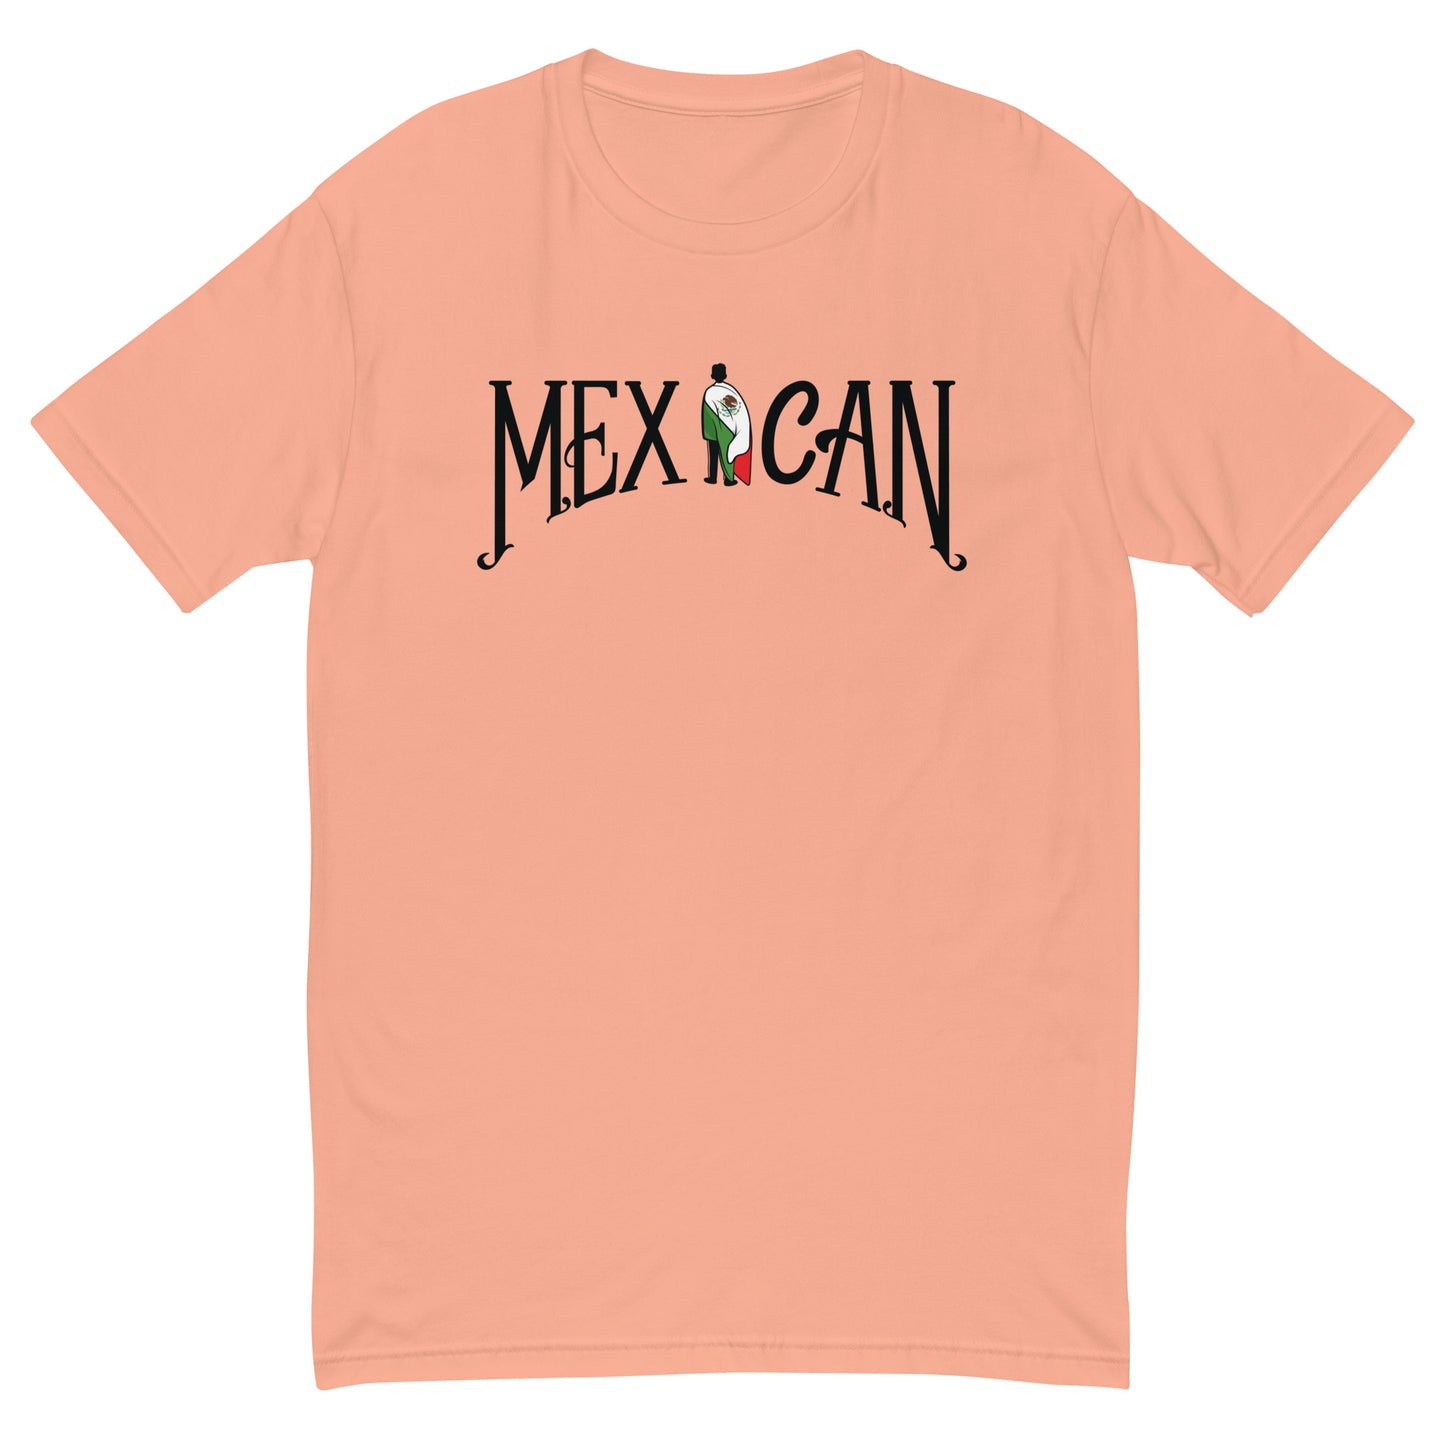 Mex I Can Short Sleeve T-shirt